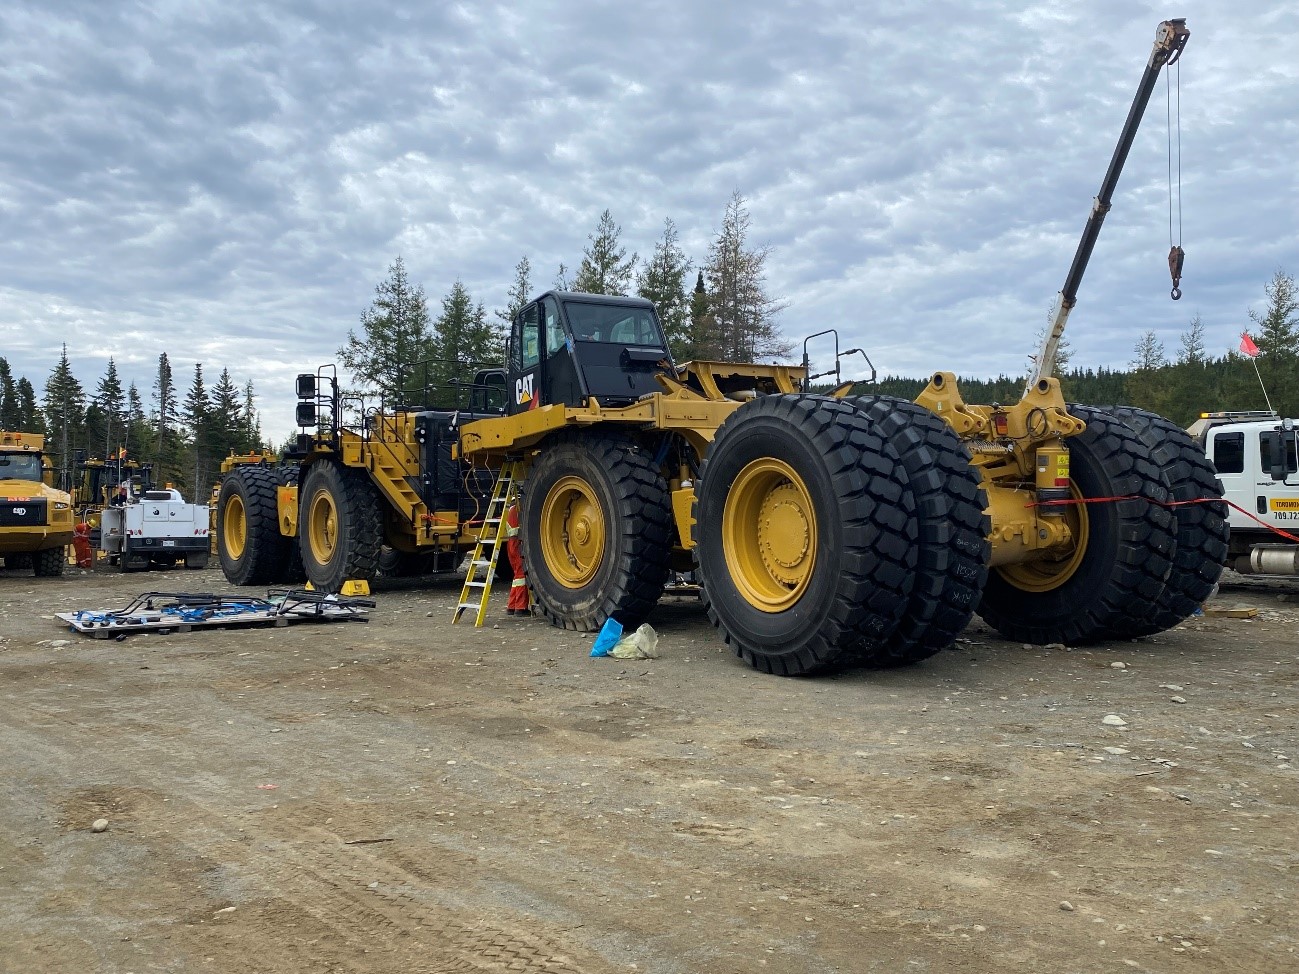 Caterpillar 6020 shovel (top) and two Caterpillar 777 100t mine trucks undergoing on-site preparation (bottom)